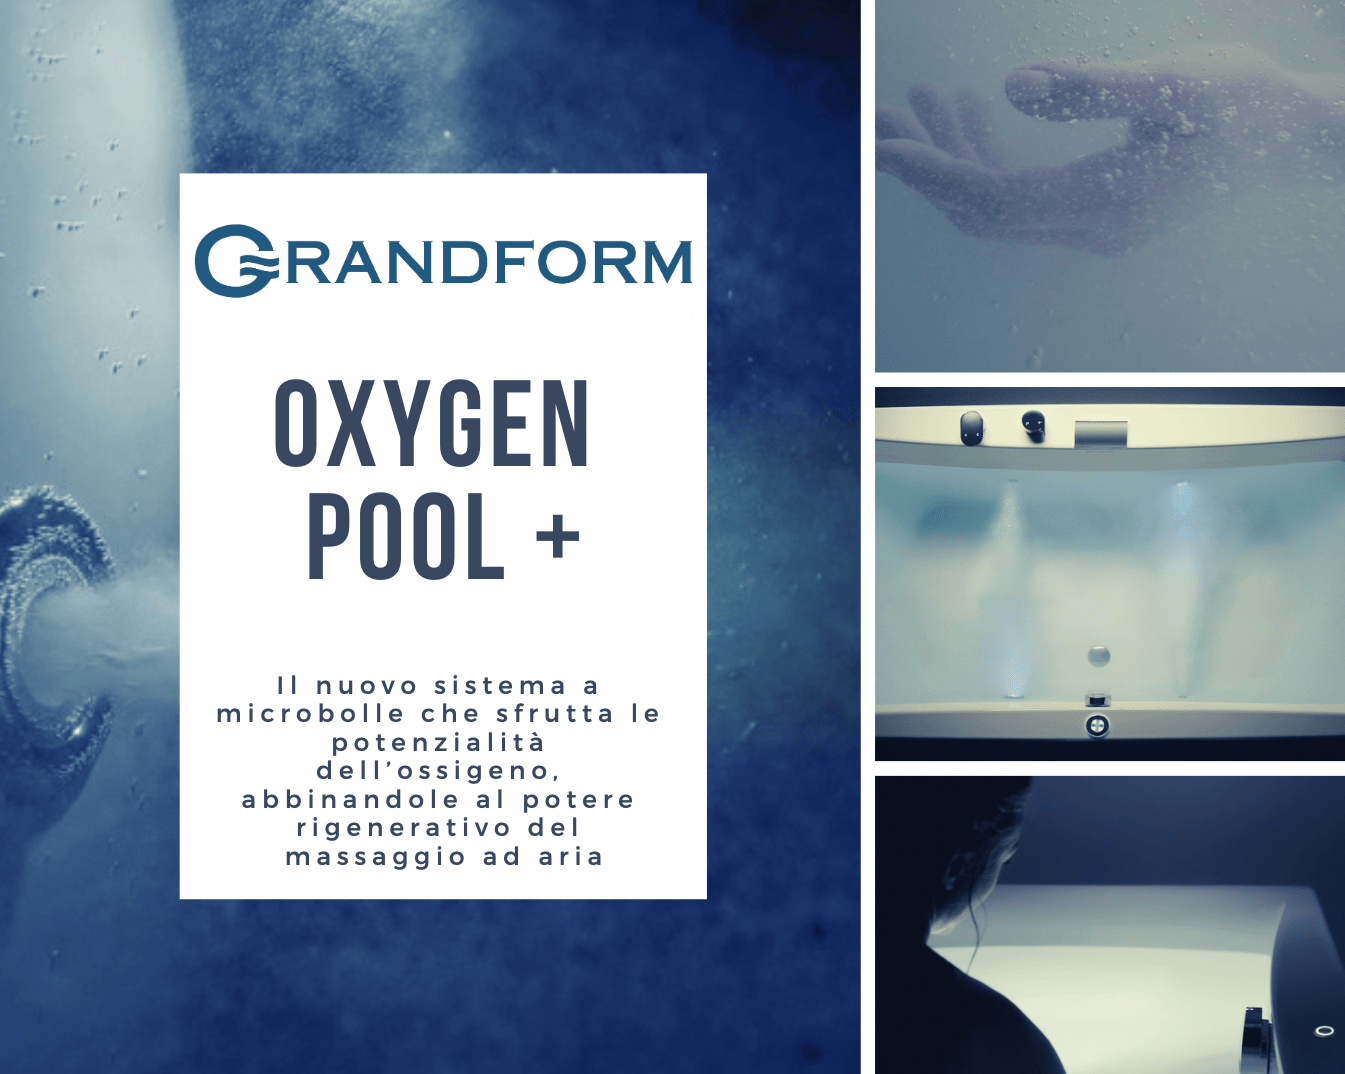 Grandform Oxygen Pool +